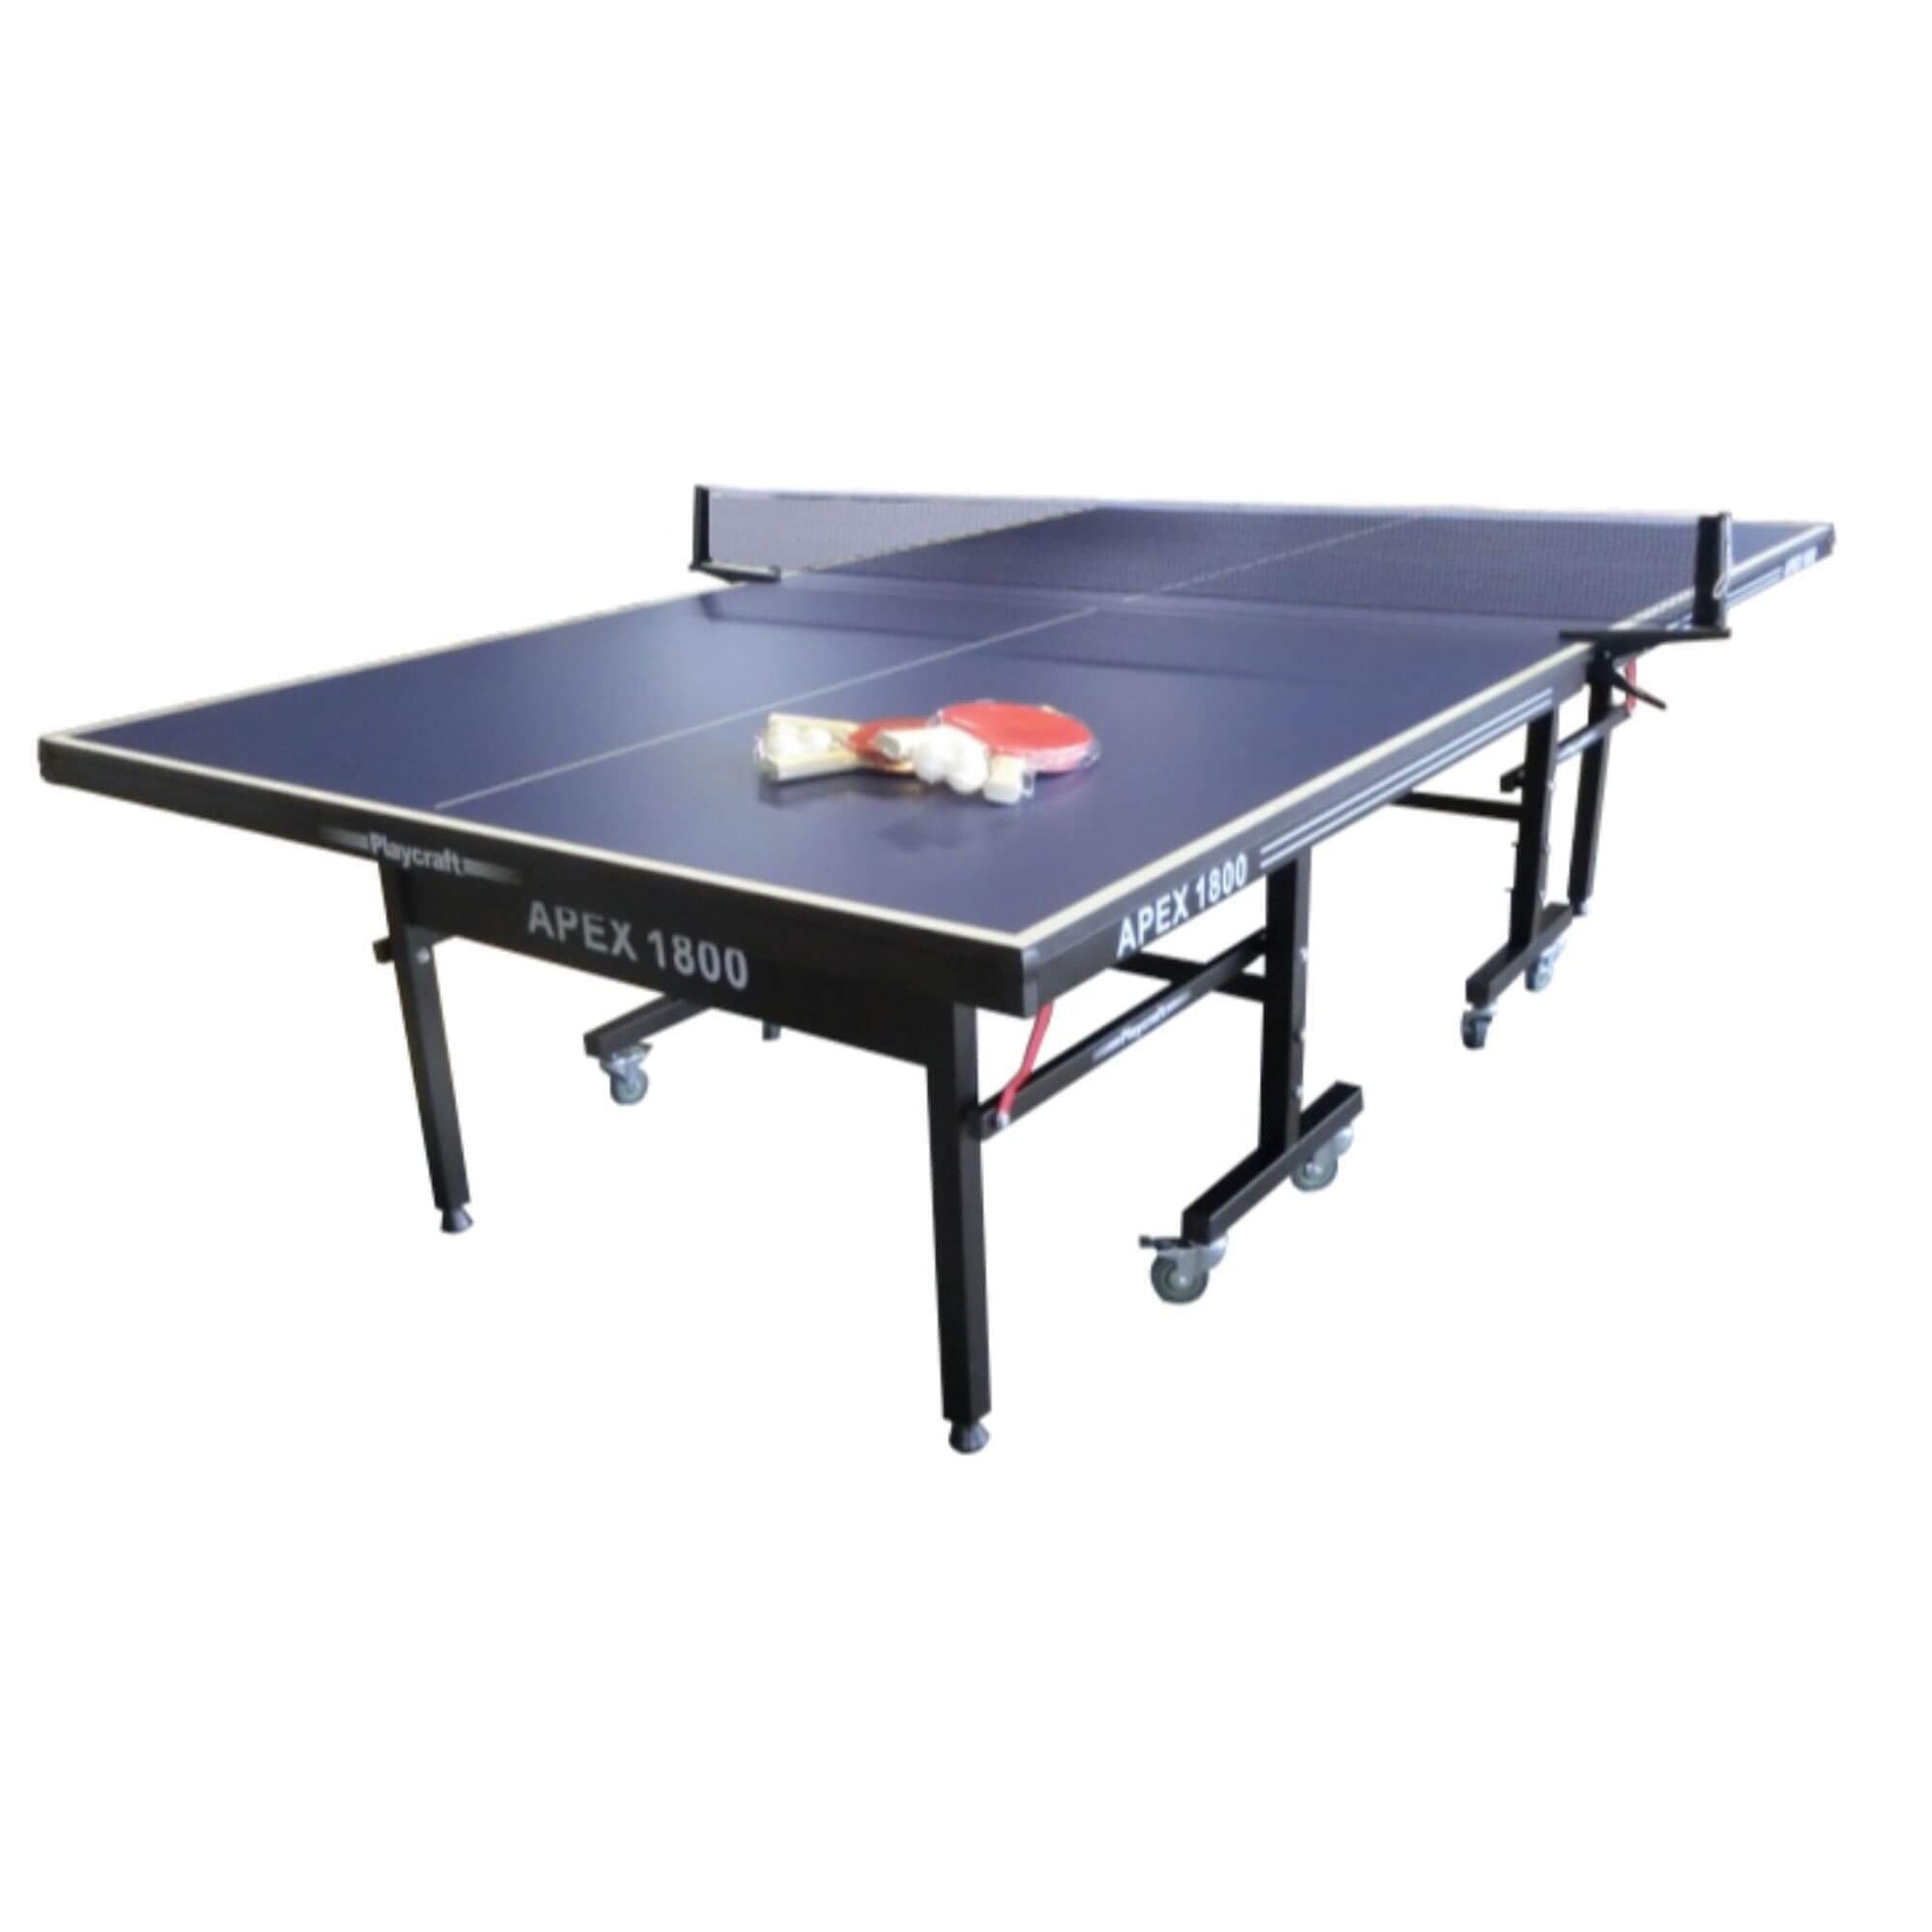 Playcraft Apex 1800 Indoor 9' Table Tennis Table - Upper Livin